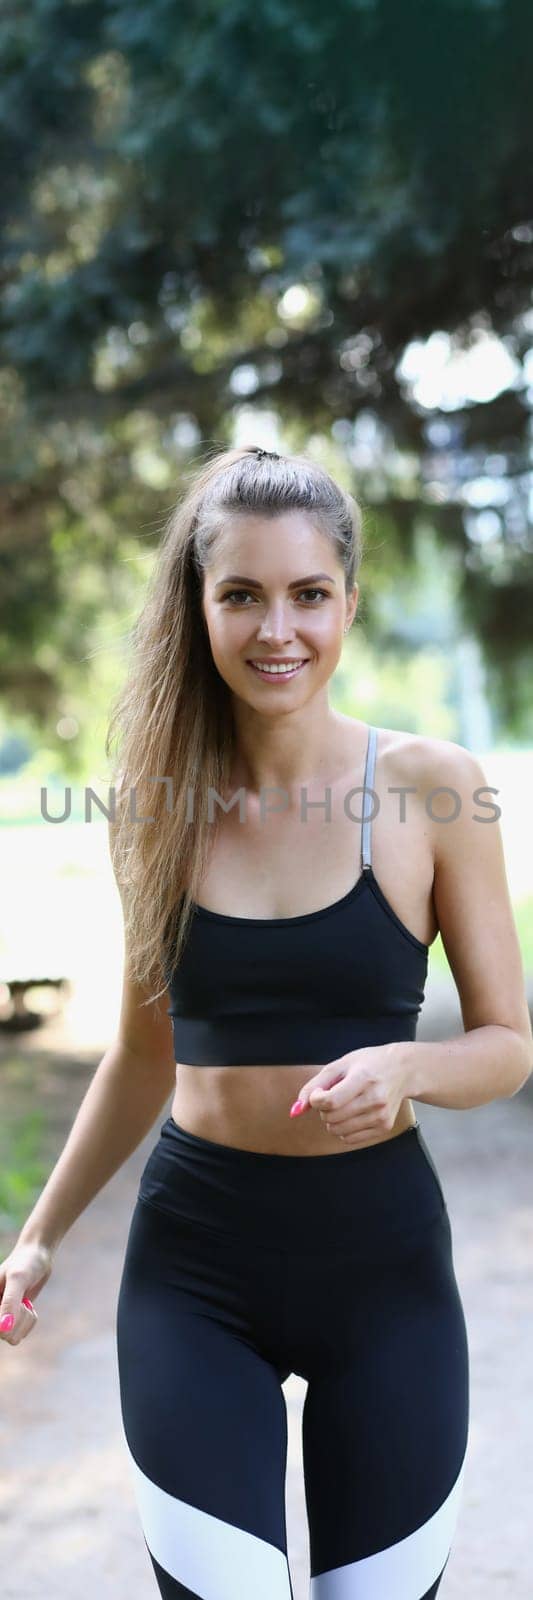 Portrait of happy positive cheerful girl jogging in park. Runner running jogging in park